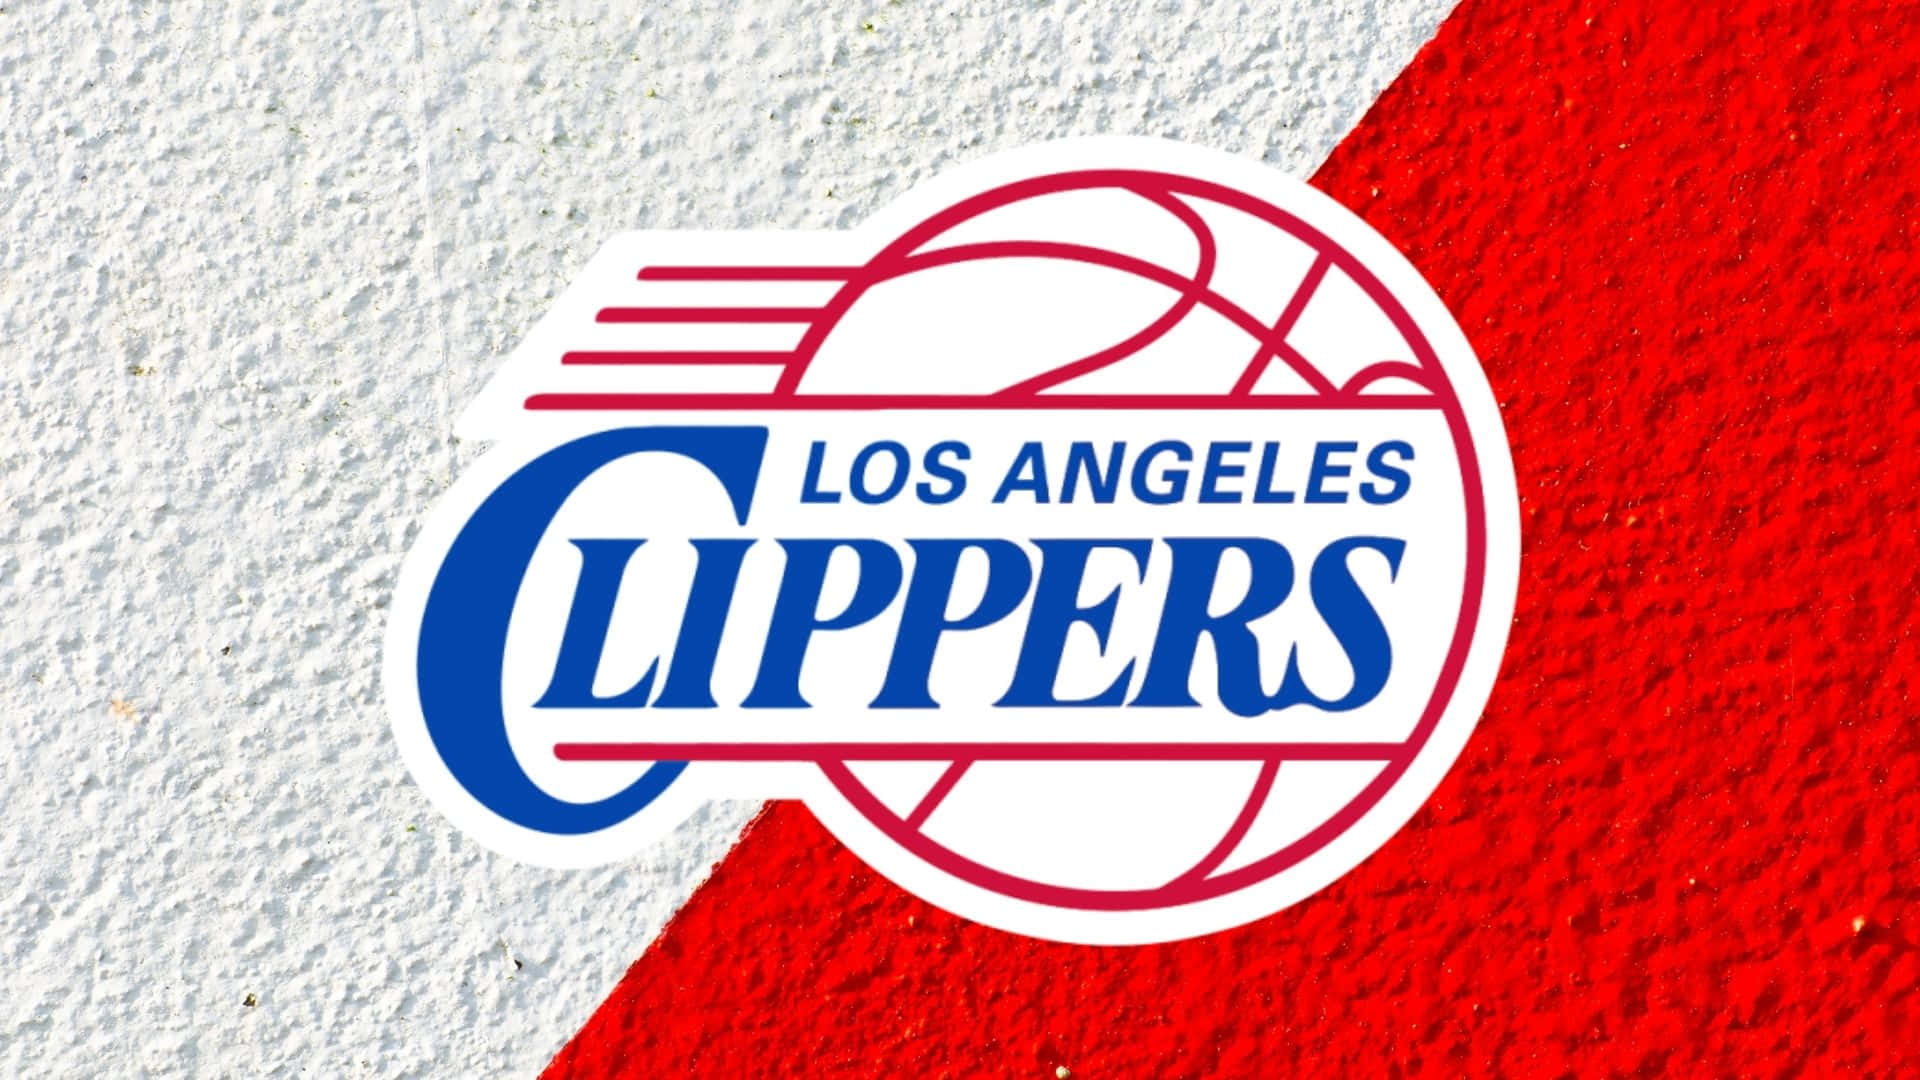 Dielos Angeles Clippers, Erheben Sich Wallpaper